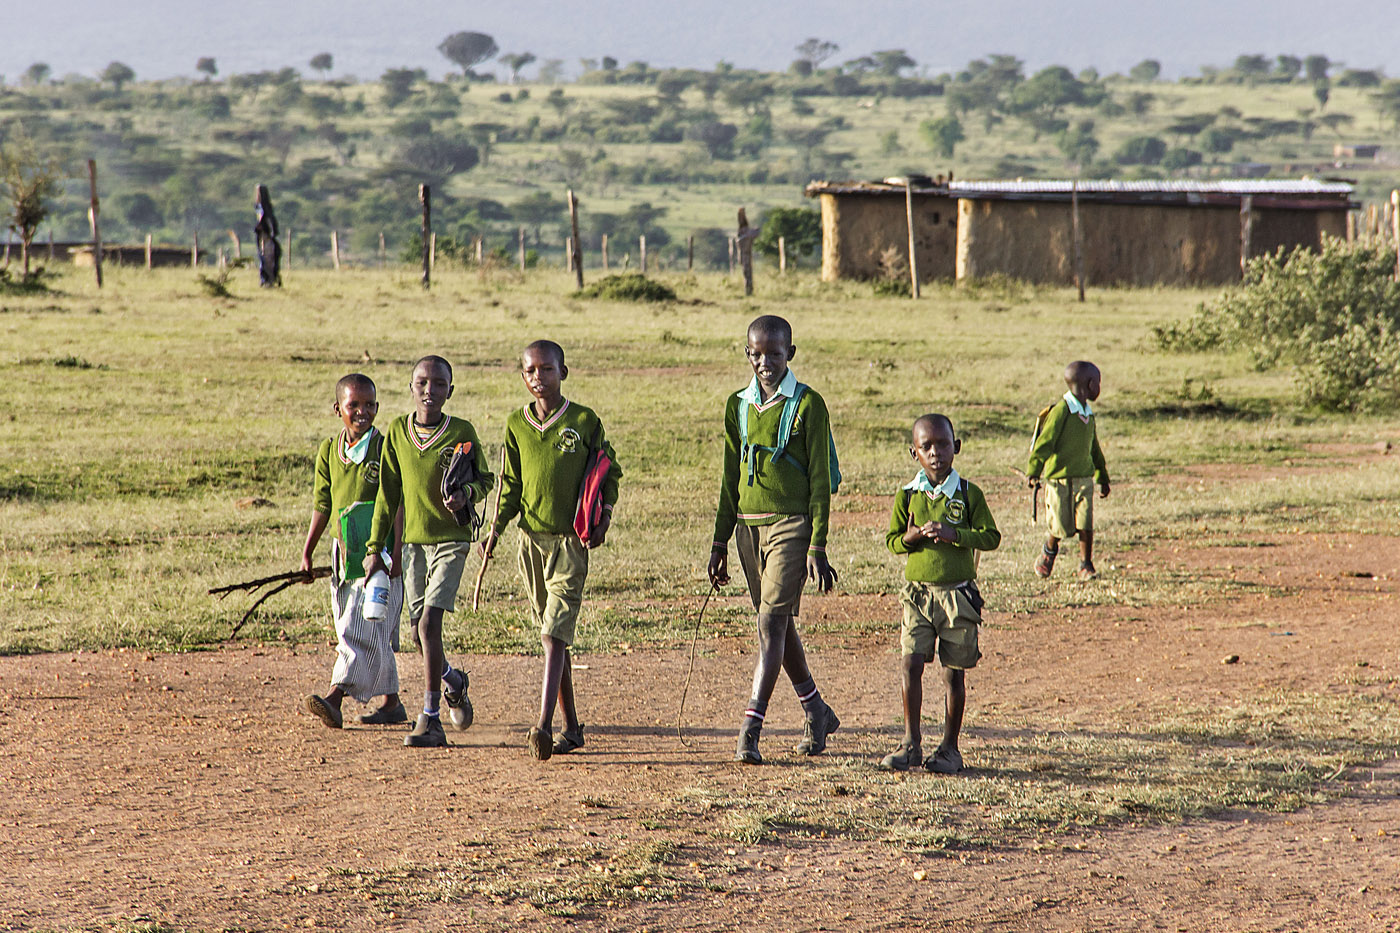 Children of Maasai tribe going to school